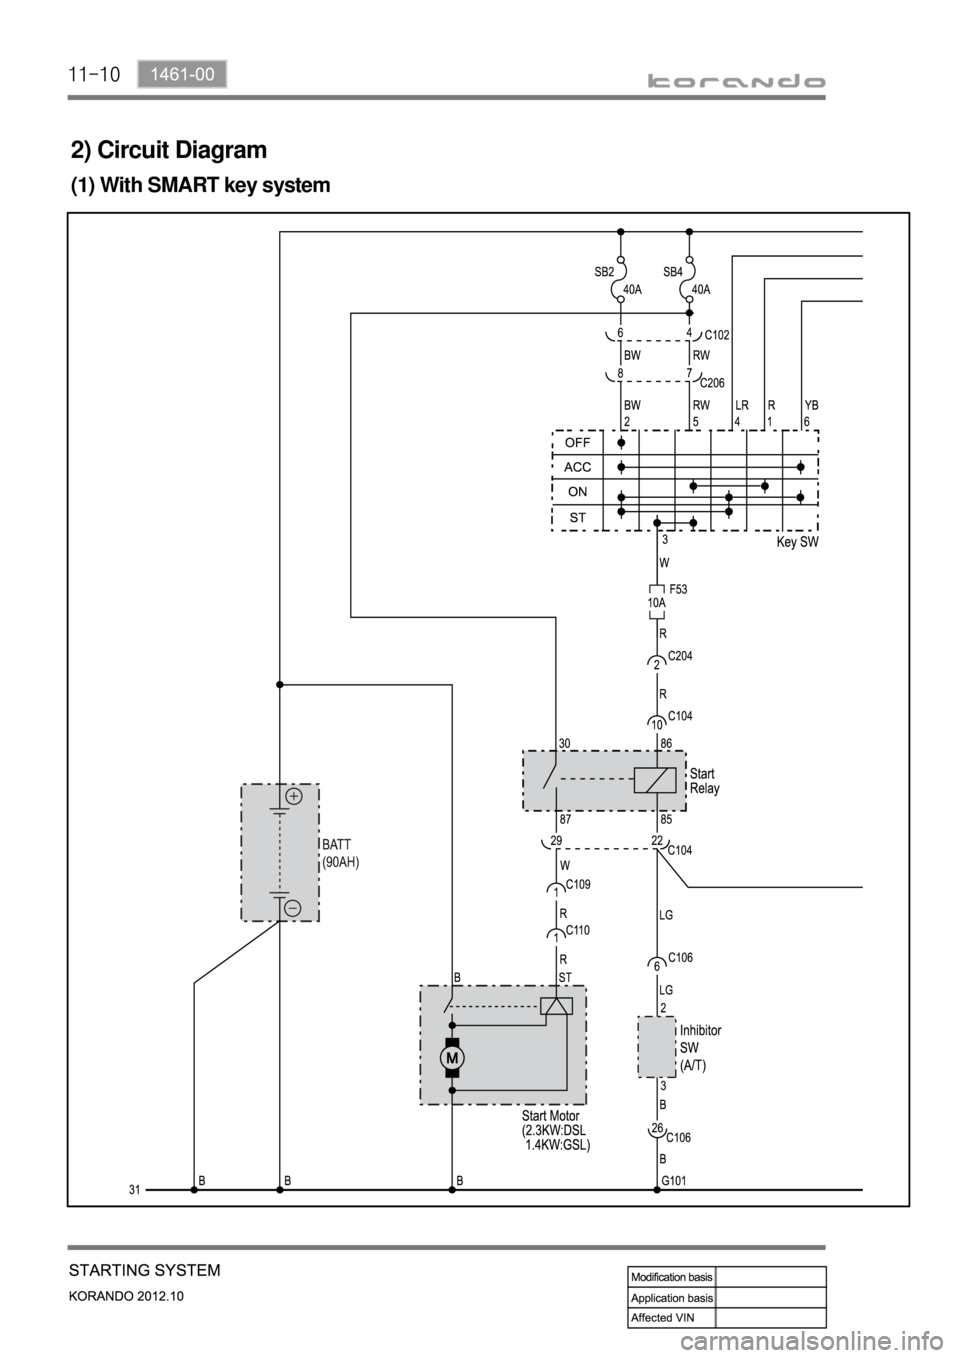 SSANGYONG KORANDO 2012  Service Manual 11-10
2) Circuit Diagram
(1) With SMART key system 